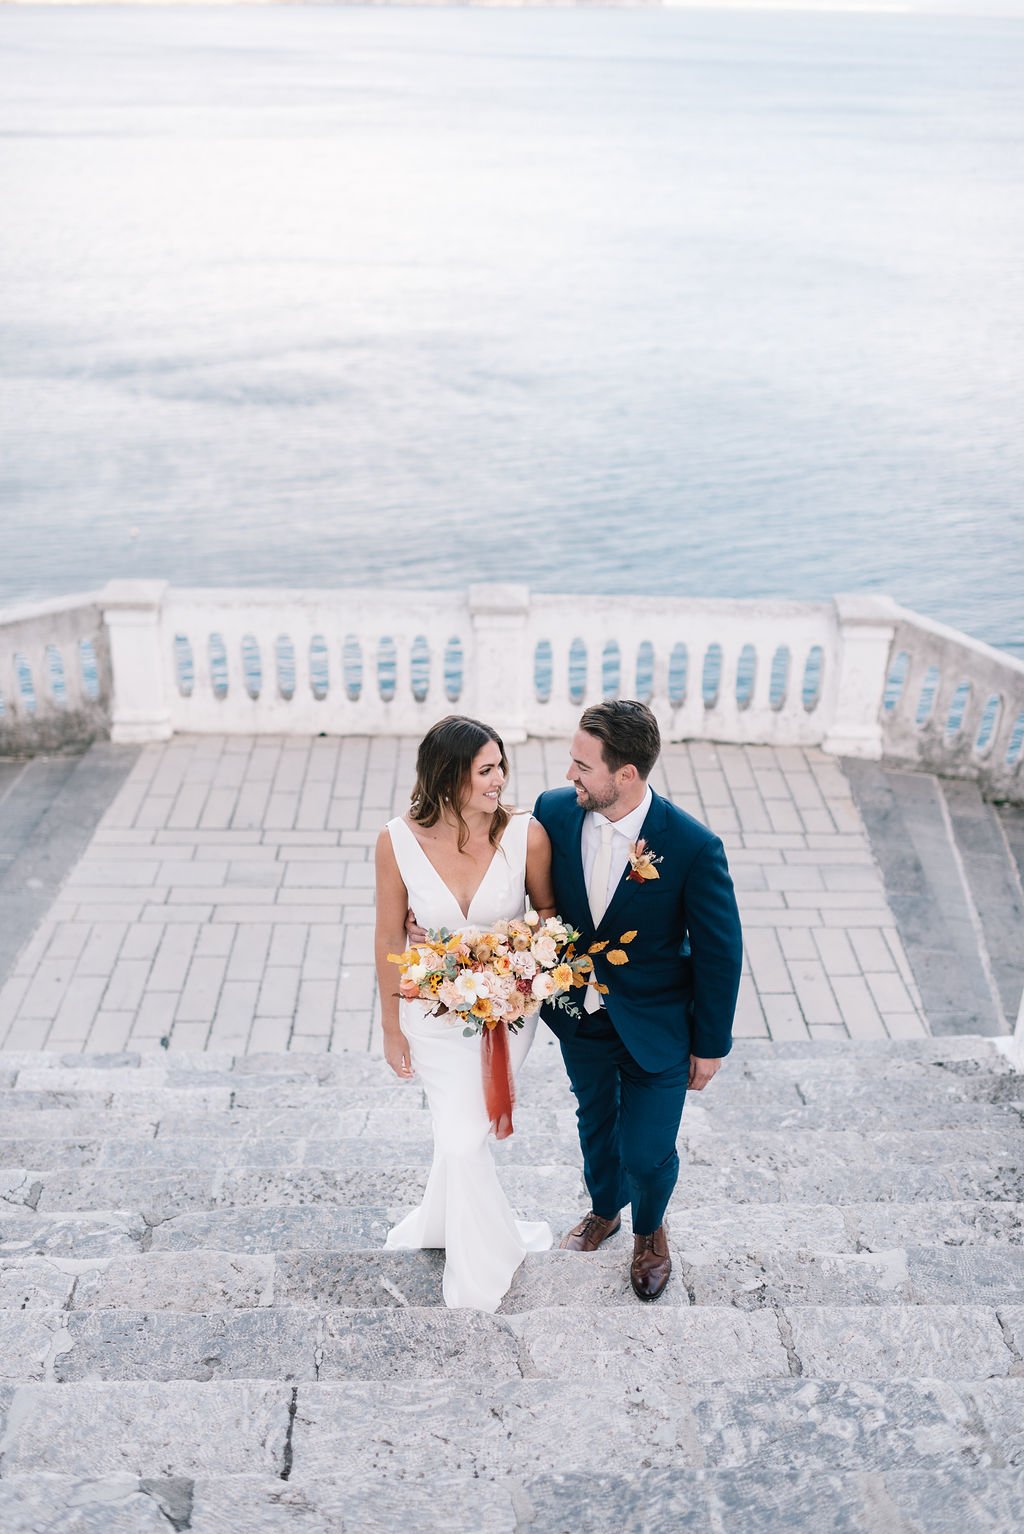 Made-With-Love-Ryder-Crepe-Wedding-Dress-Amalfi-Coast-Elopement-25.jpg